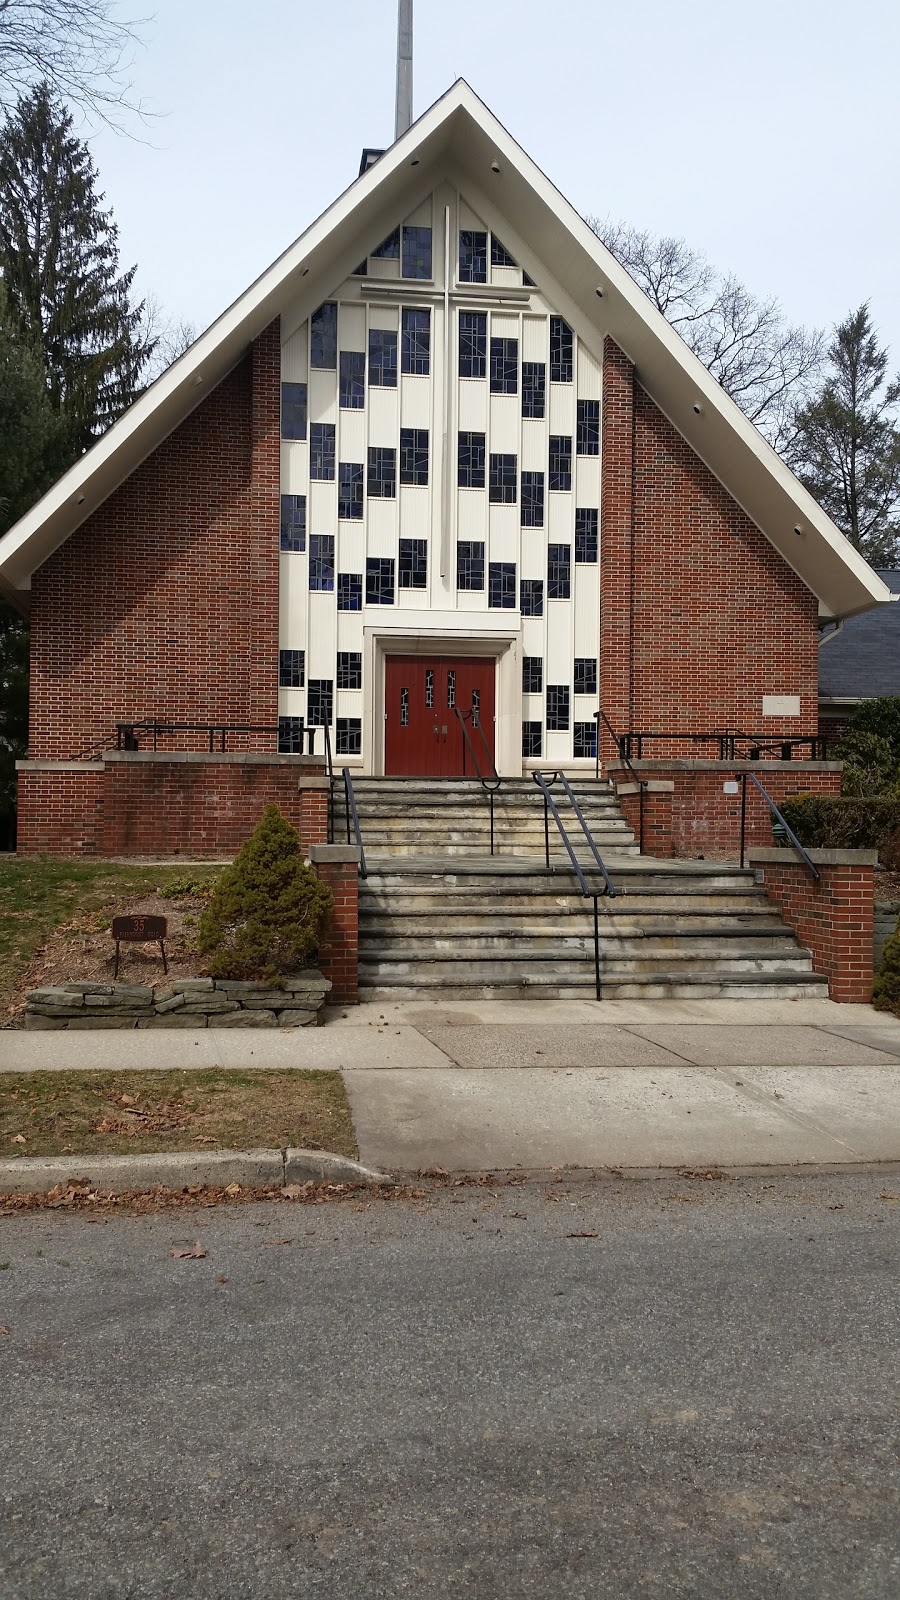 Upper Ridgewood Community Church | 35 Fairmount Rd, Ridgewood, NJ 07450, USA | Phone: (201) 445-4082